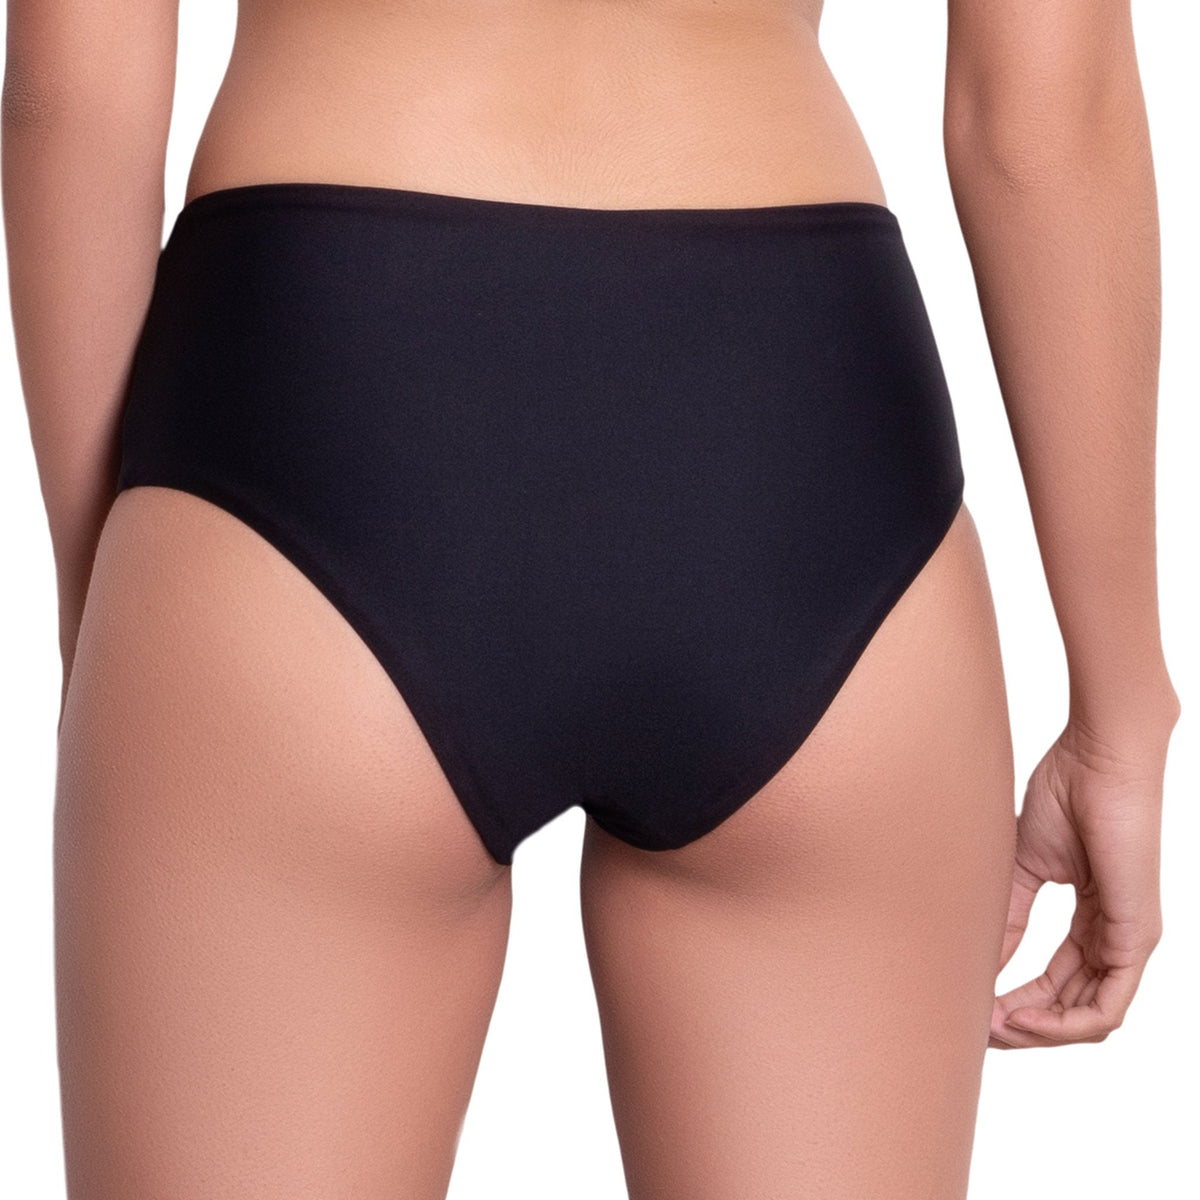 L√âA High rise panty, solid black bikini bottom by ALMA swimwear ‚Äì back view 